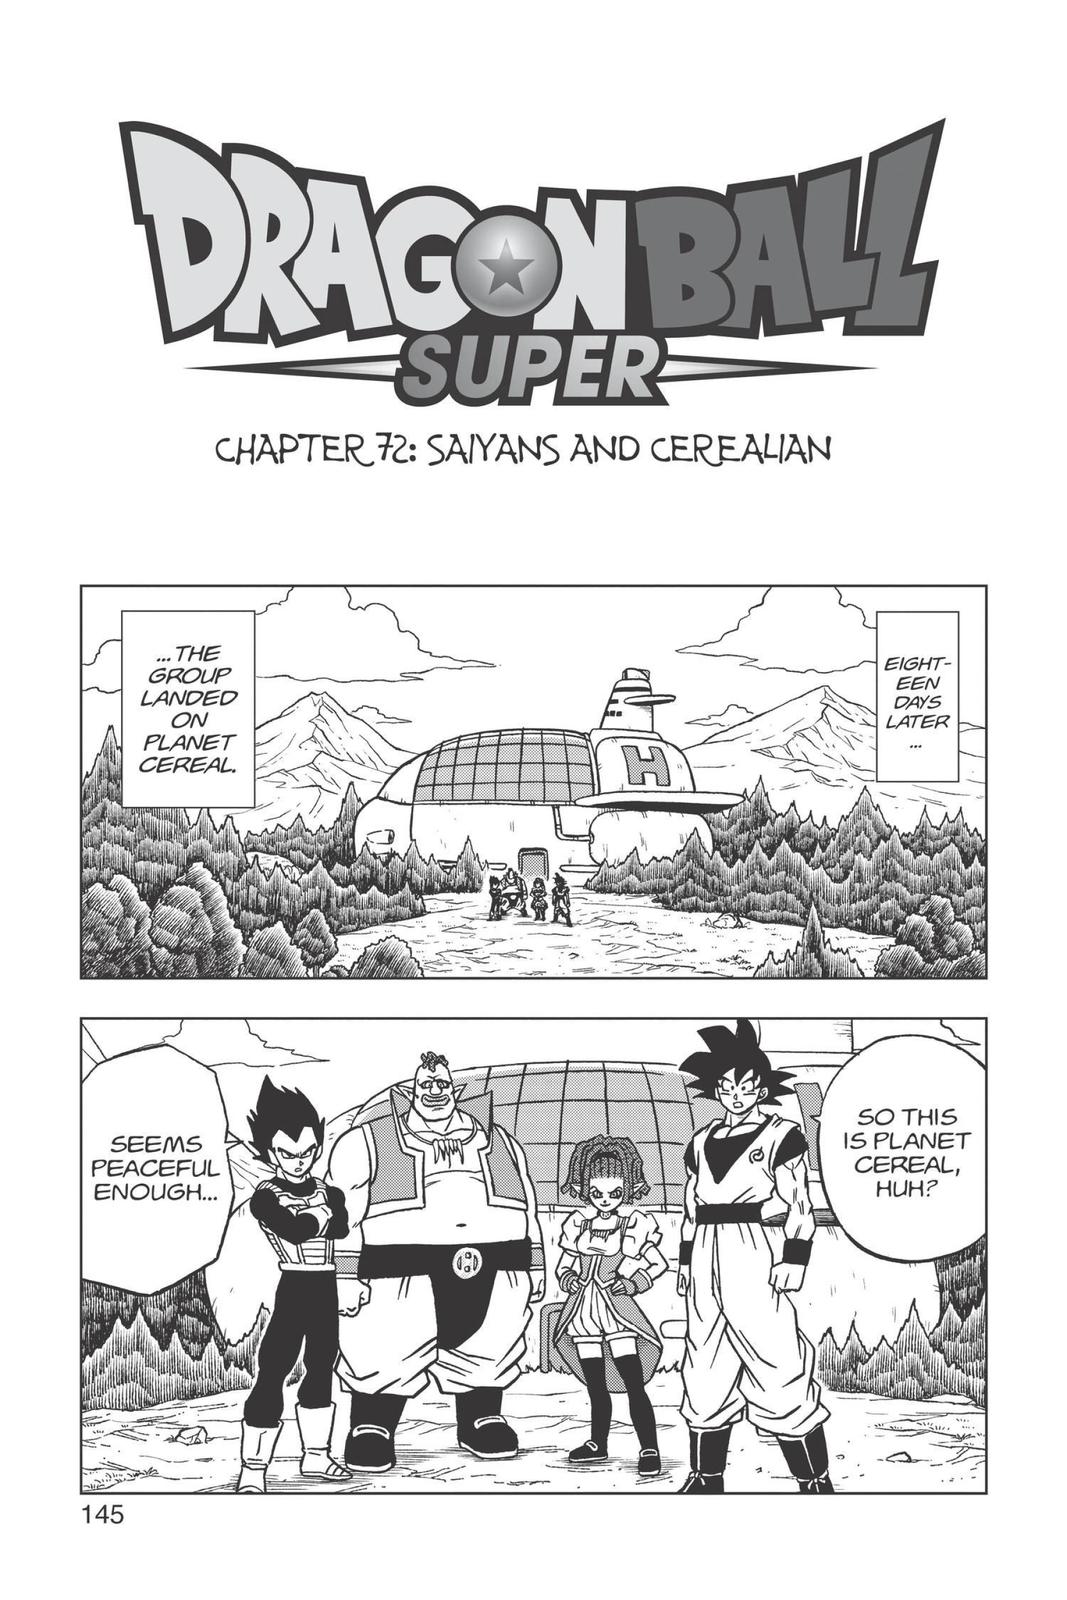 Dragon Ball Super Chapter 88 to start a fresh plot with 'Granolah the  Survivor' saga